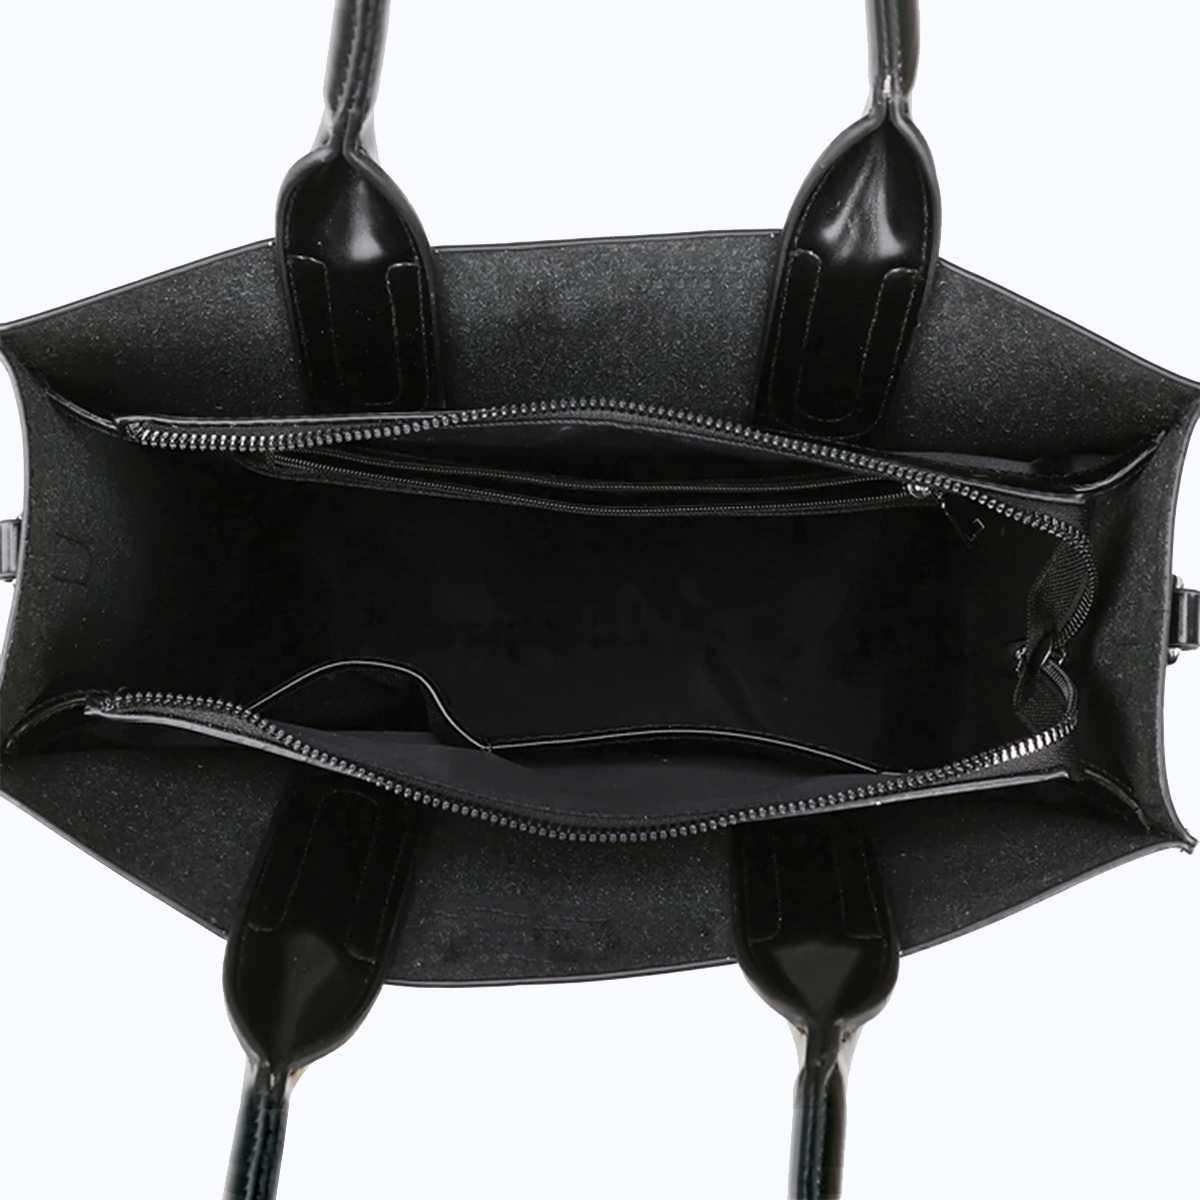 Reduce Stress At Work With Golden Retriever - Luxury Handbag V1